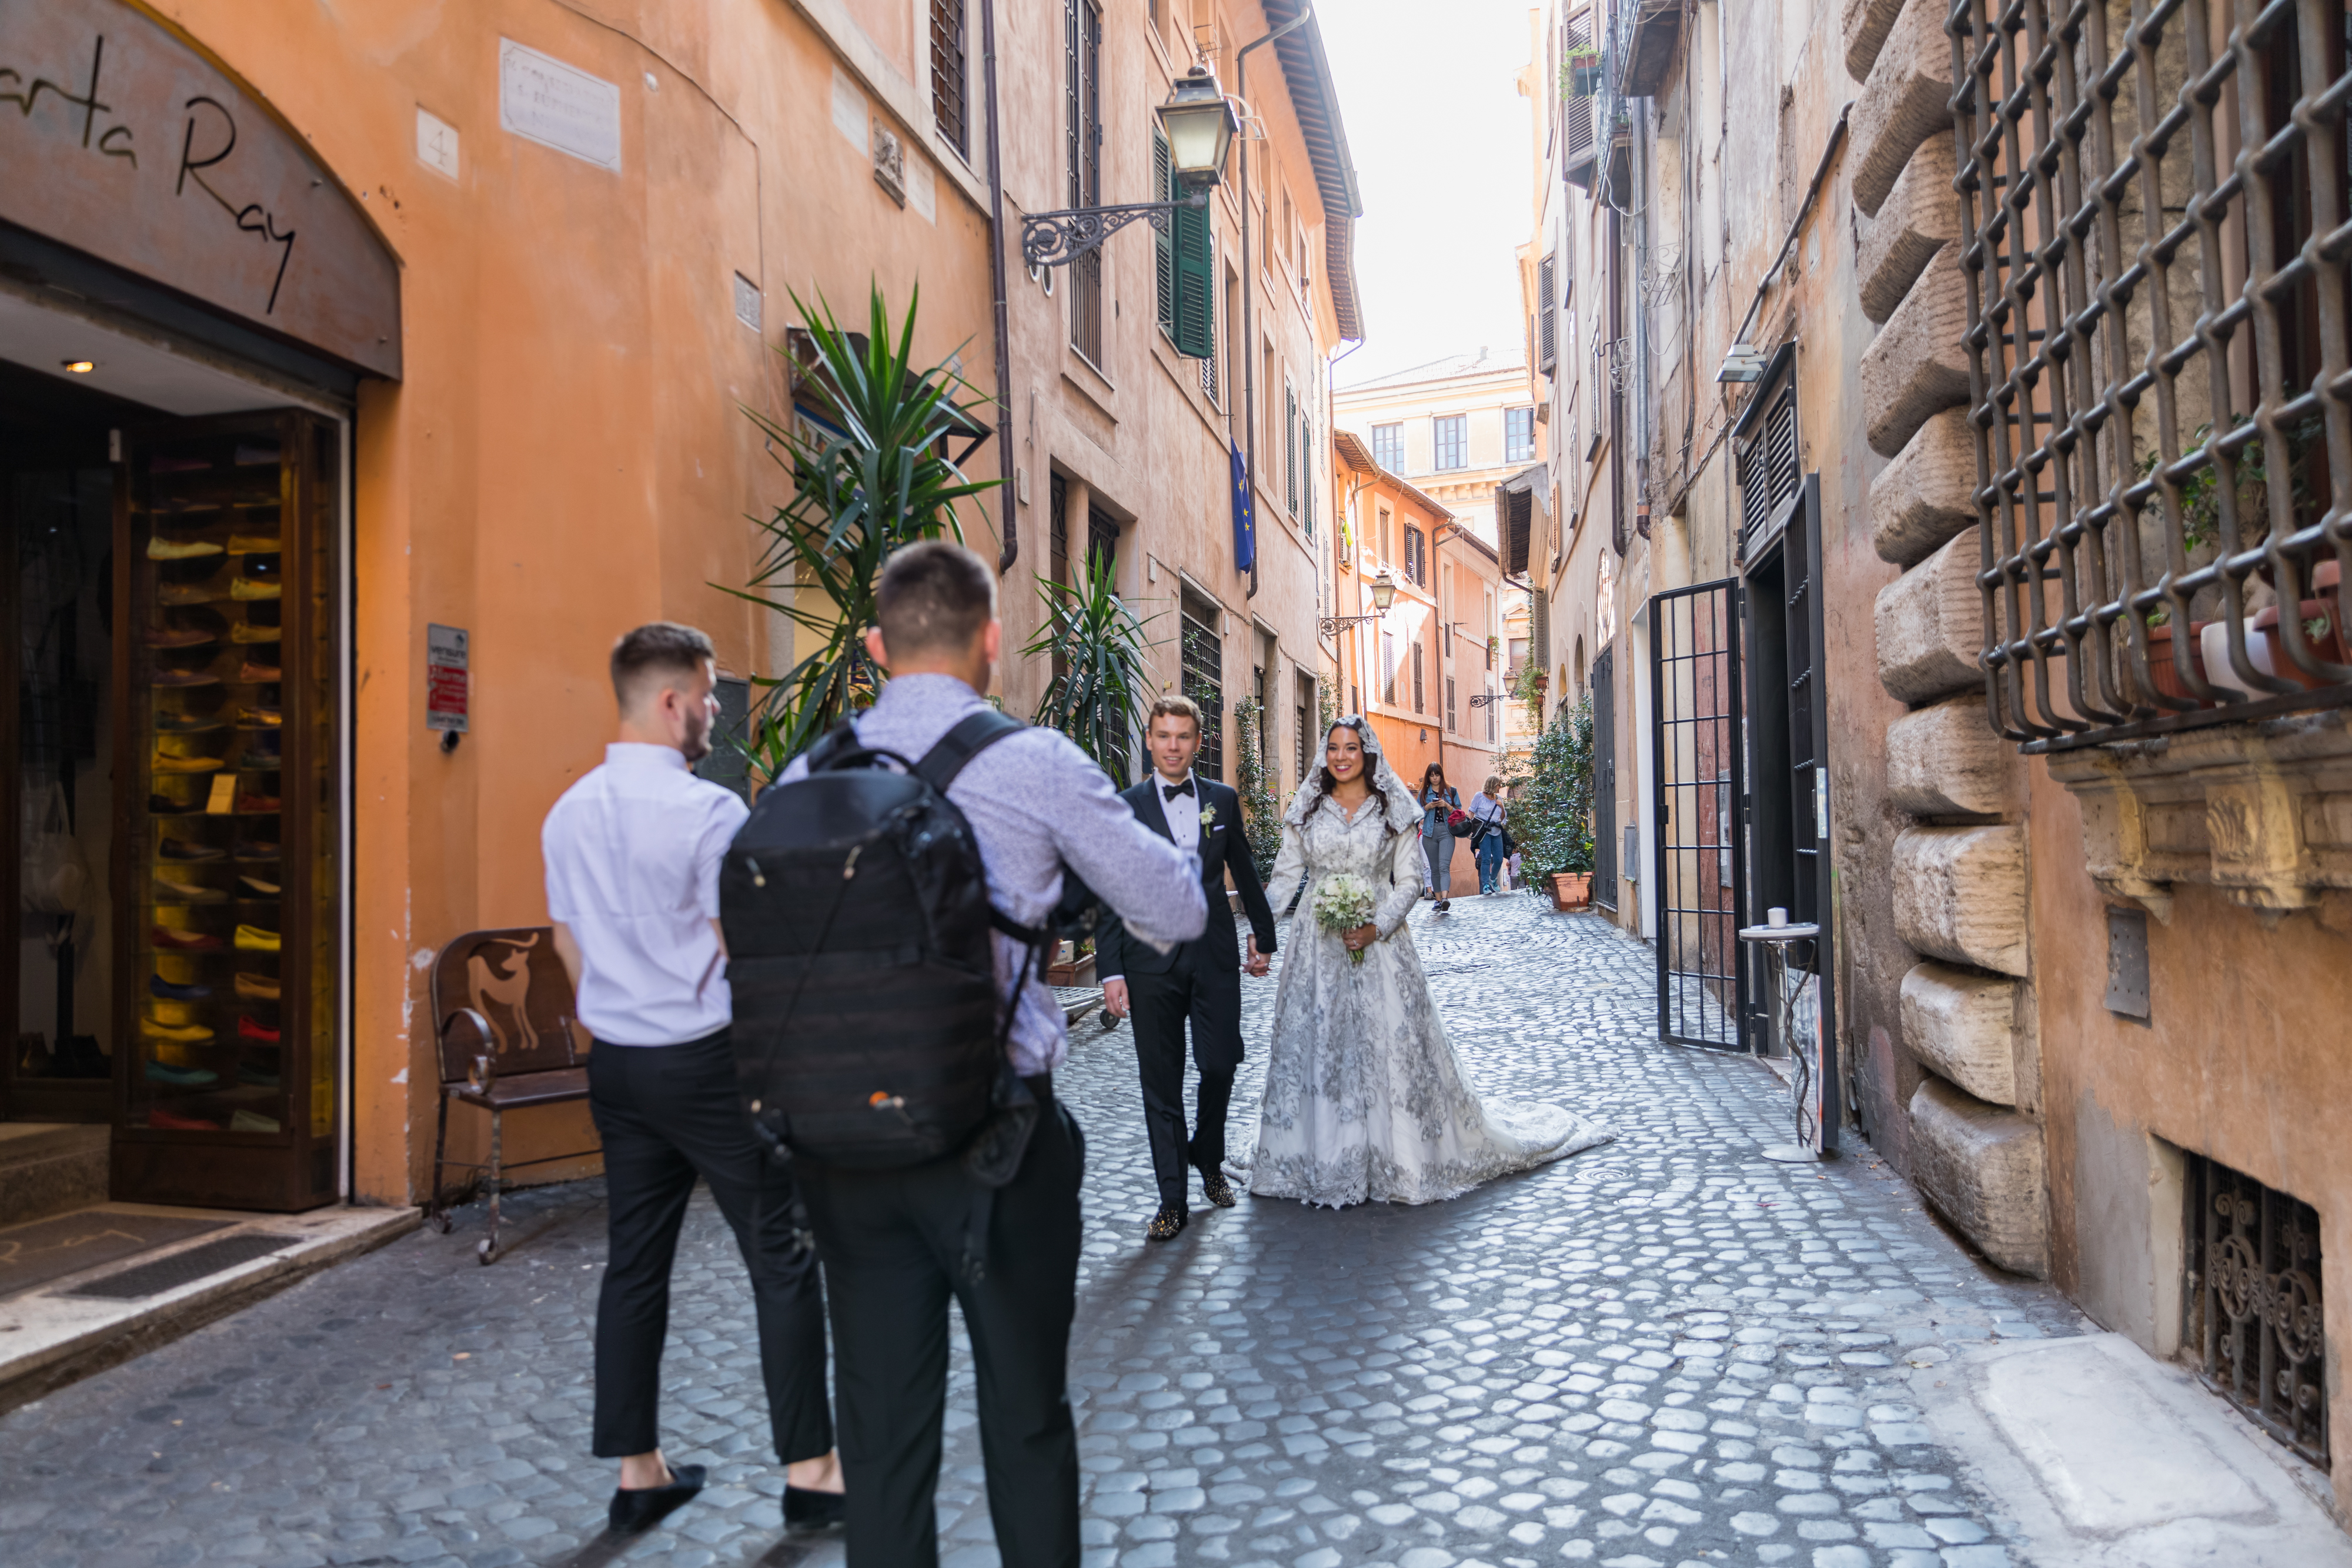 Choosing a Destination Wedding Photographer